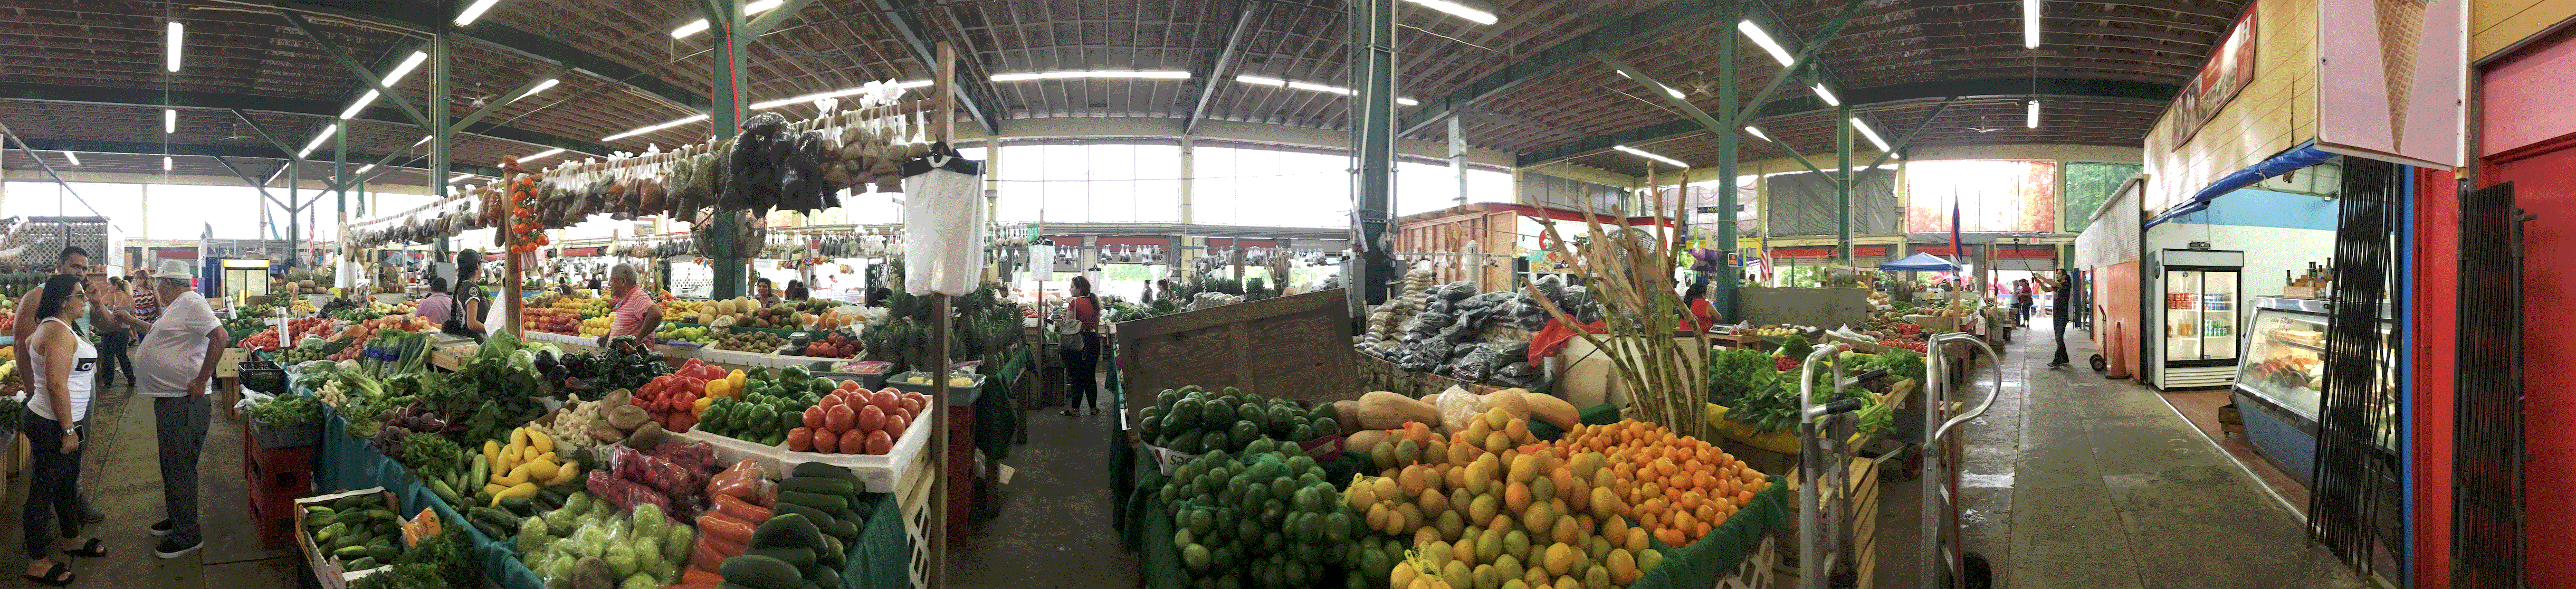 redland-farmers-market